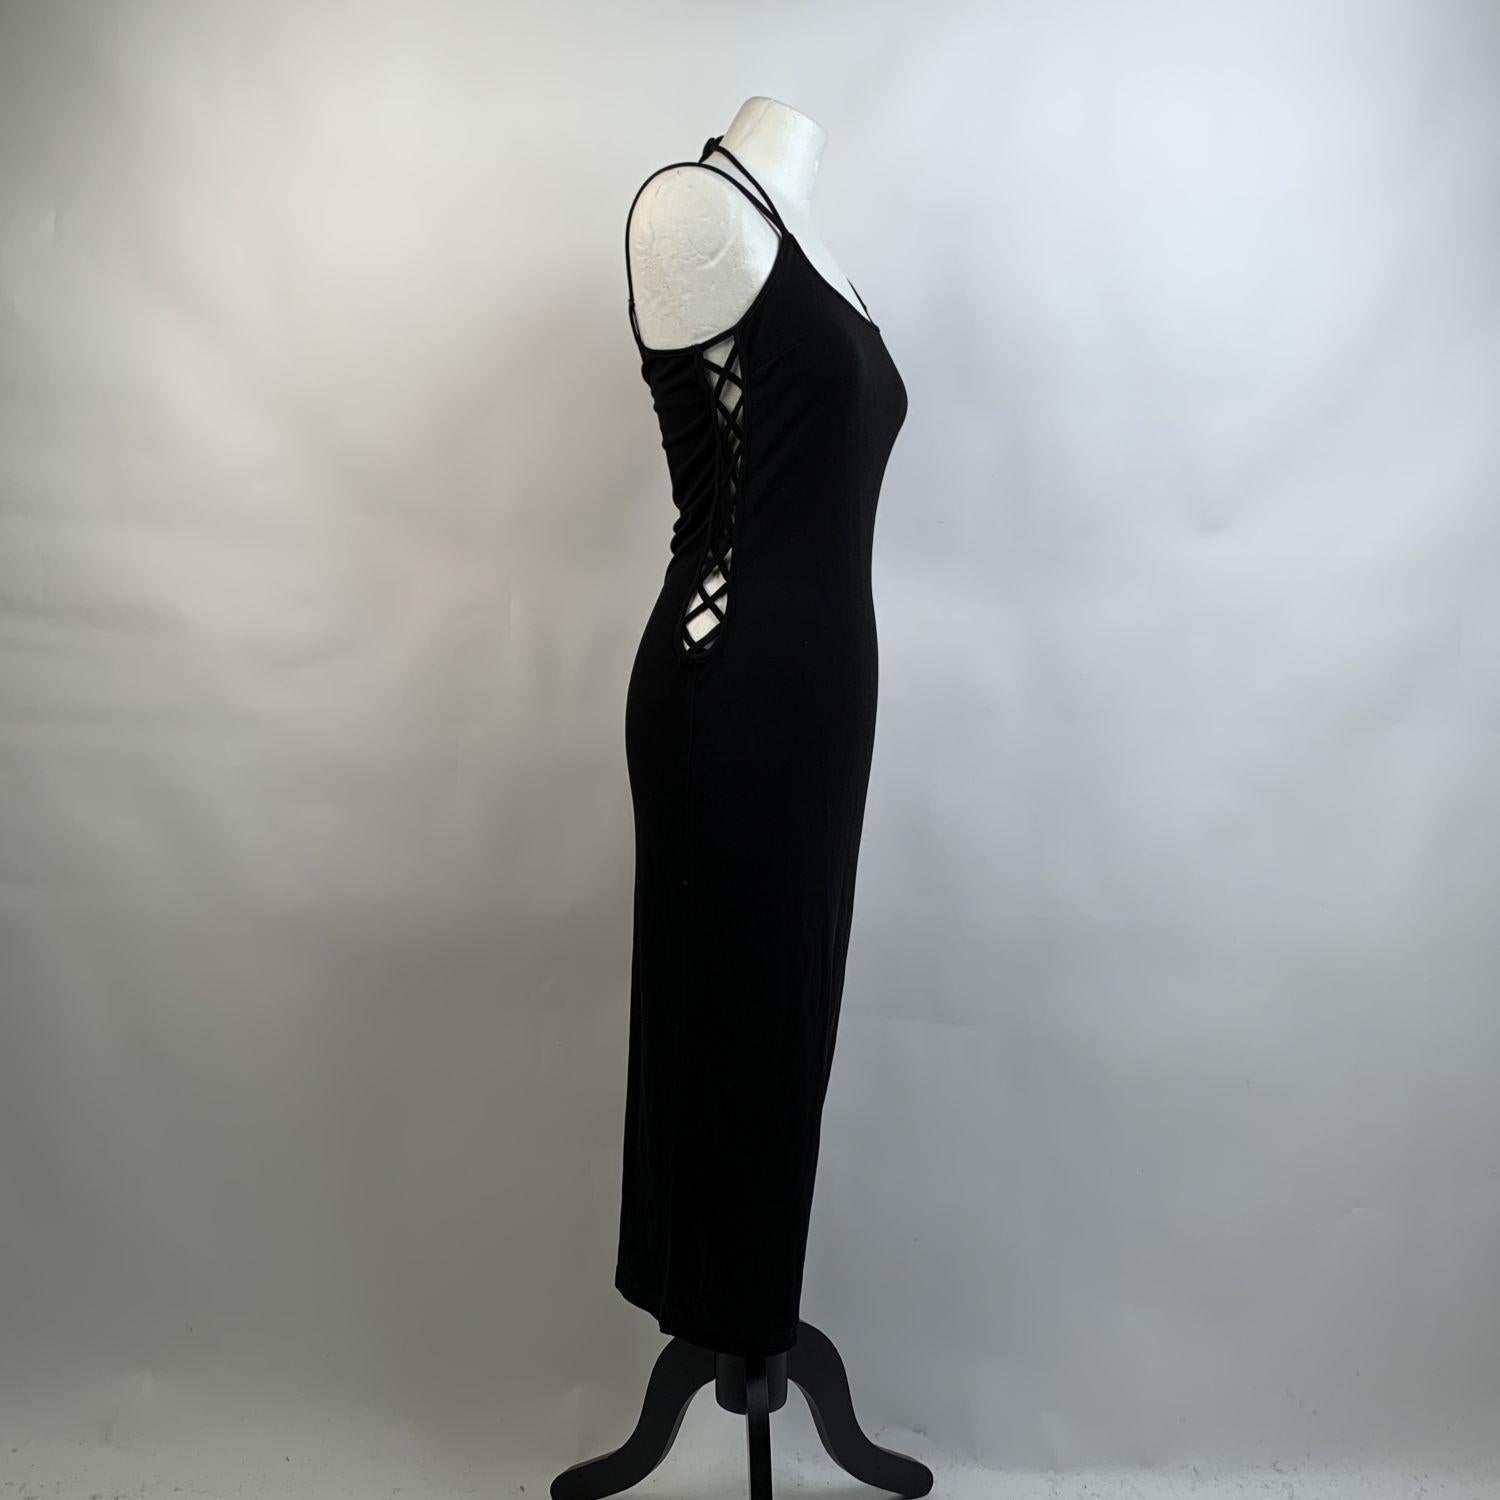 D&G Dolce & Gabbana Black Bodycon Dress with Crisscross Detail Size 44 1